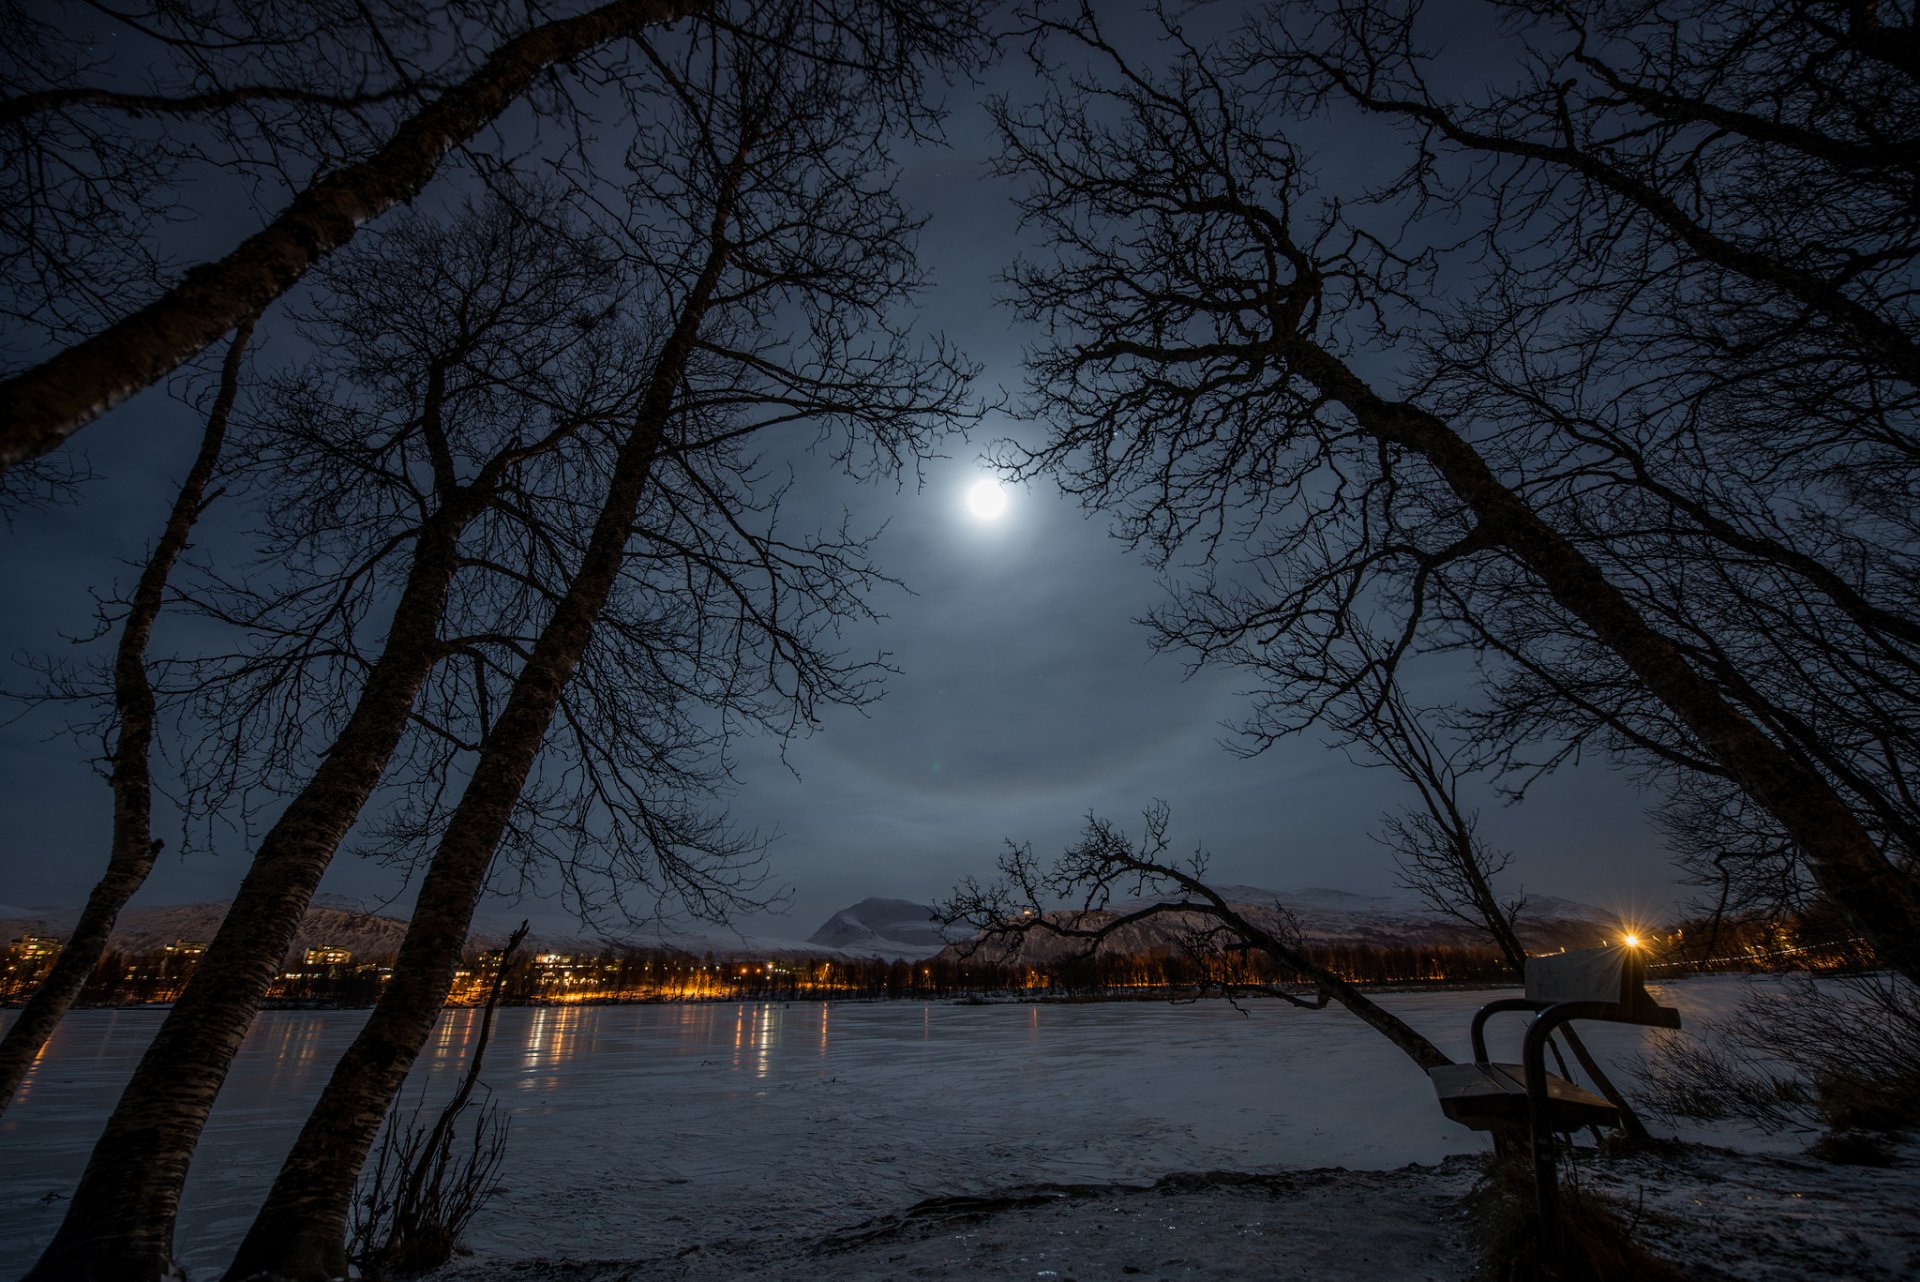 città parco panchina lago inverno notte luna luci